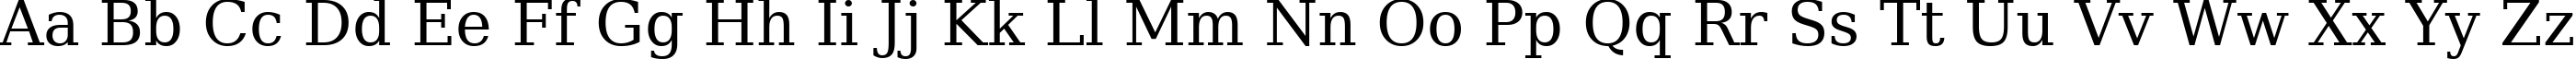 Пример написания английского алфавита шрифтом ae_Nada